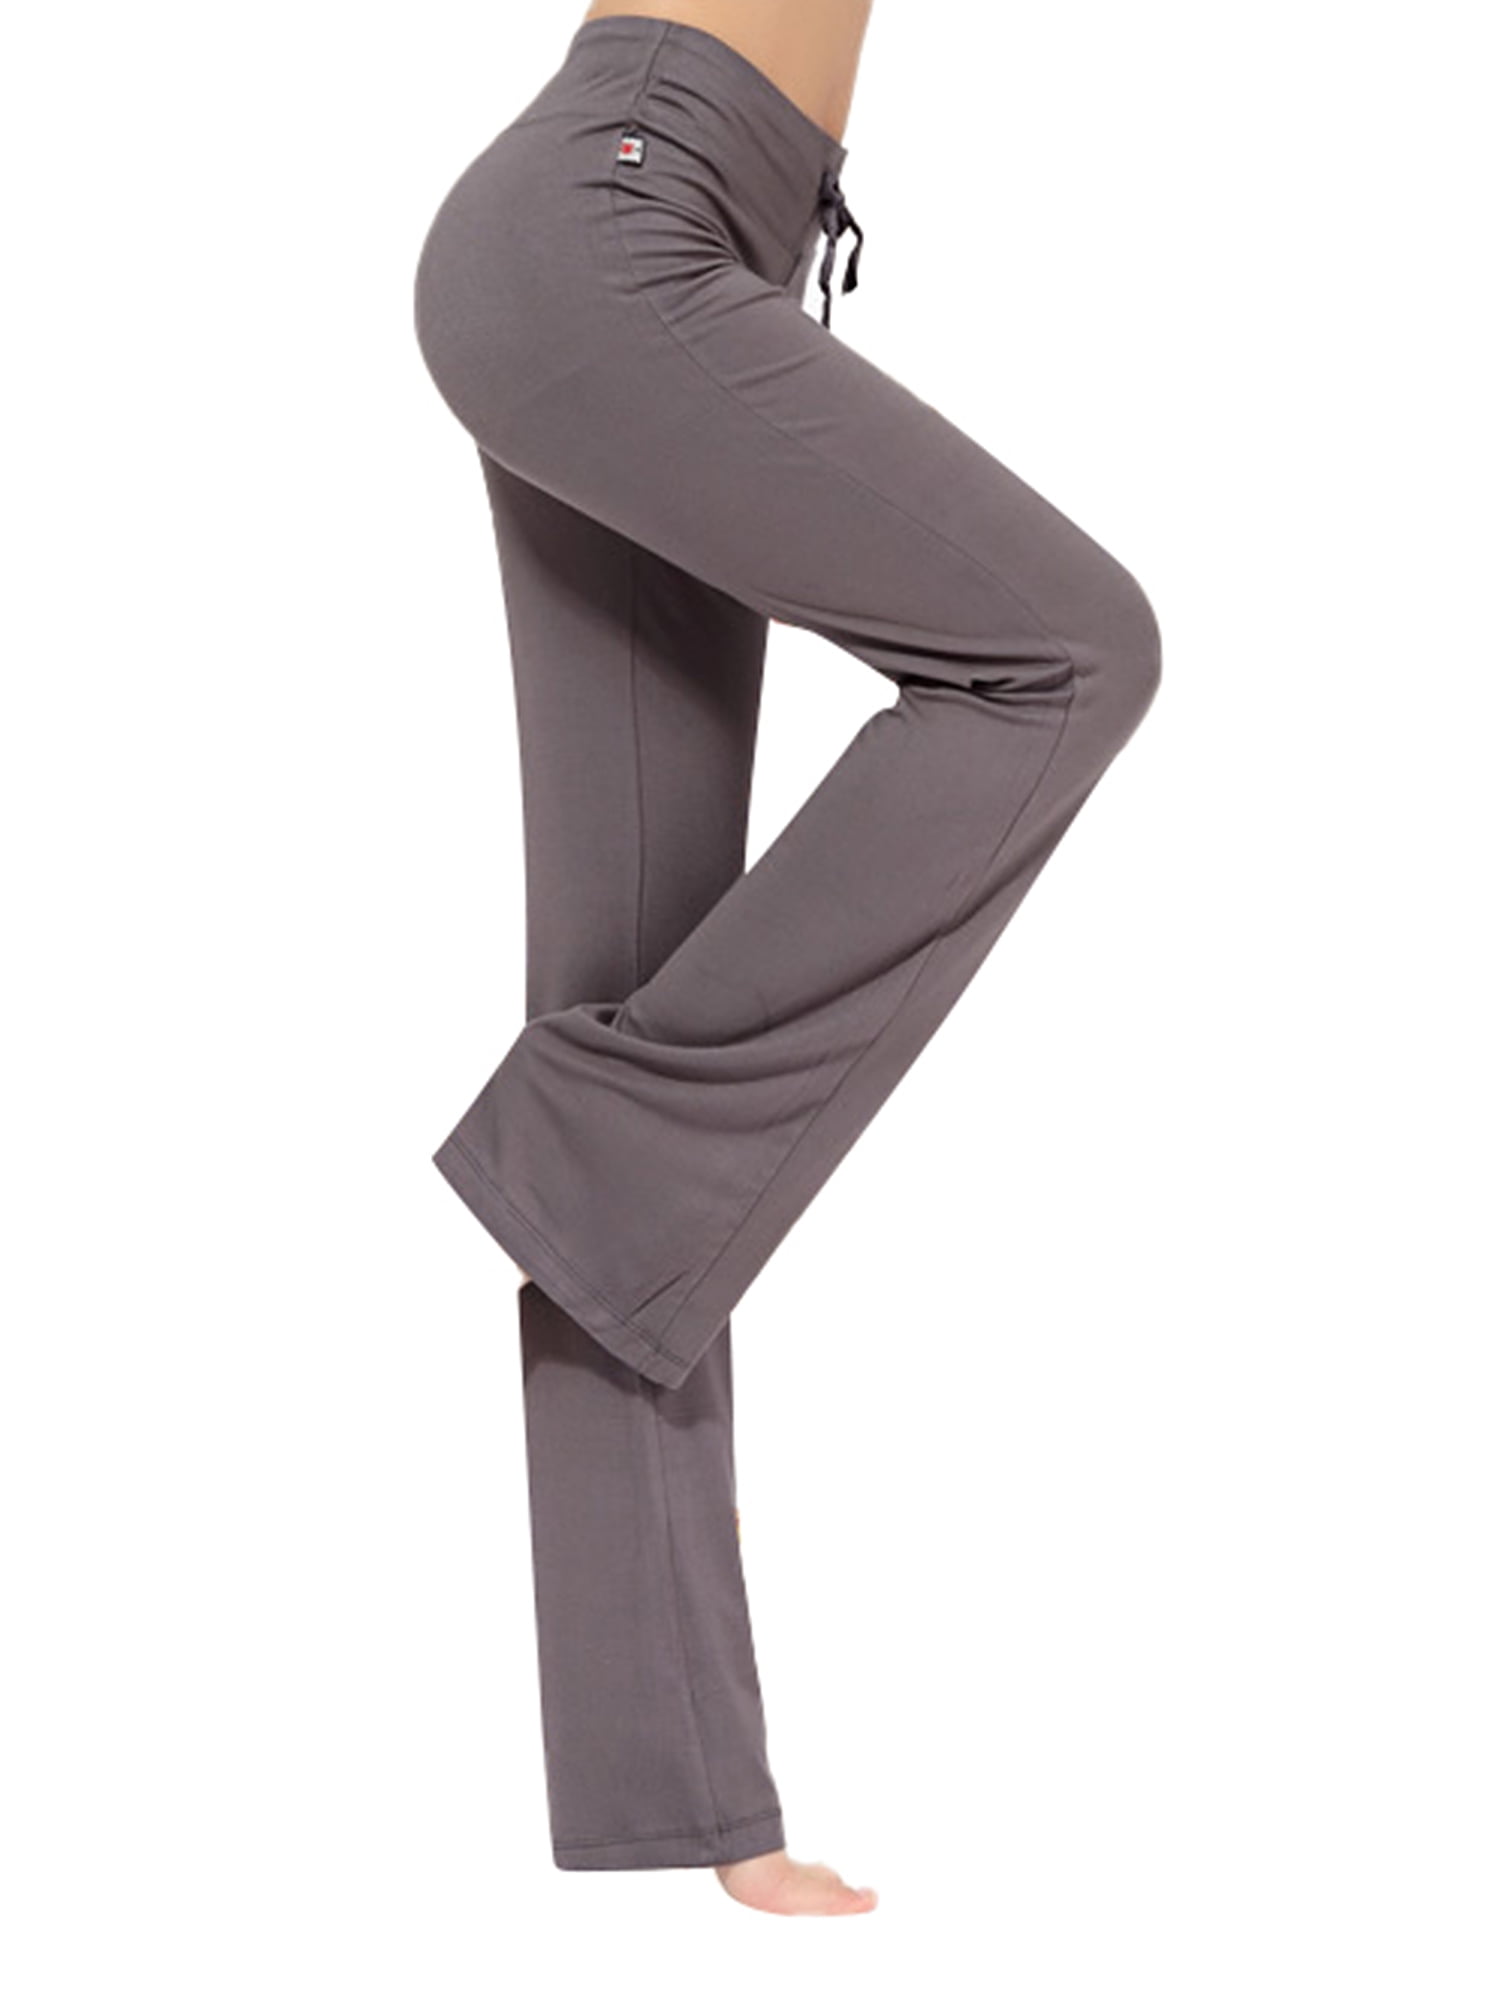 Keepfit Womens High Waist Wide Leg Pants Casual Zebra-Striped Flare Bell Bottom Stretch Long Pants Tie Dye Yoga Pants 